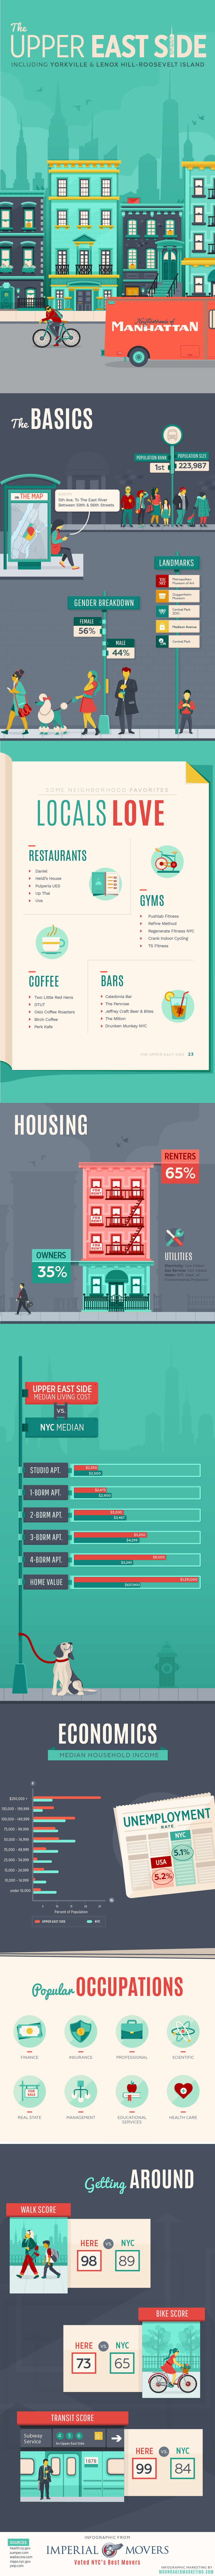 Upper East Side Manhattan neighborhood guide infographic